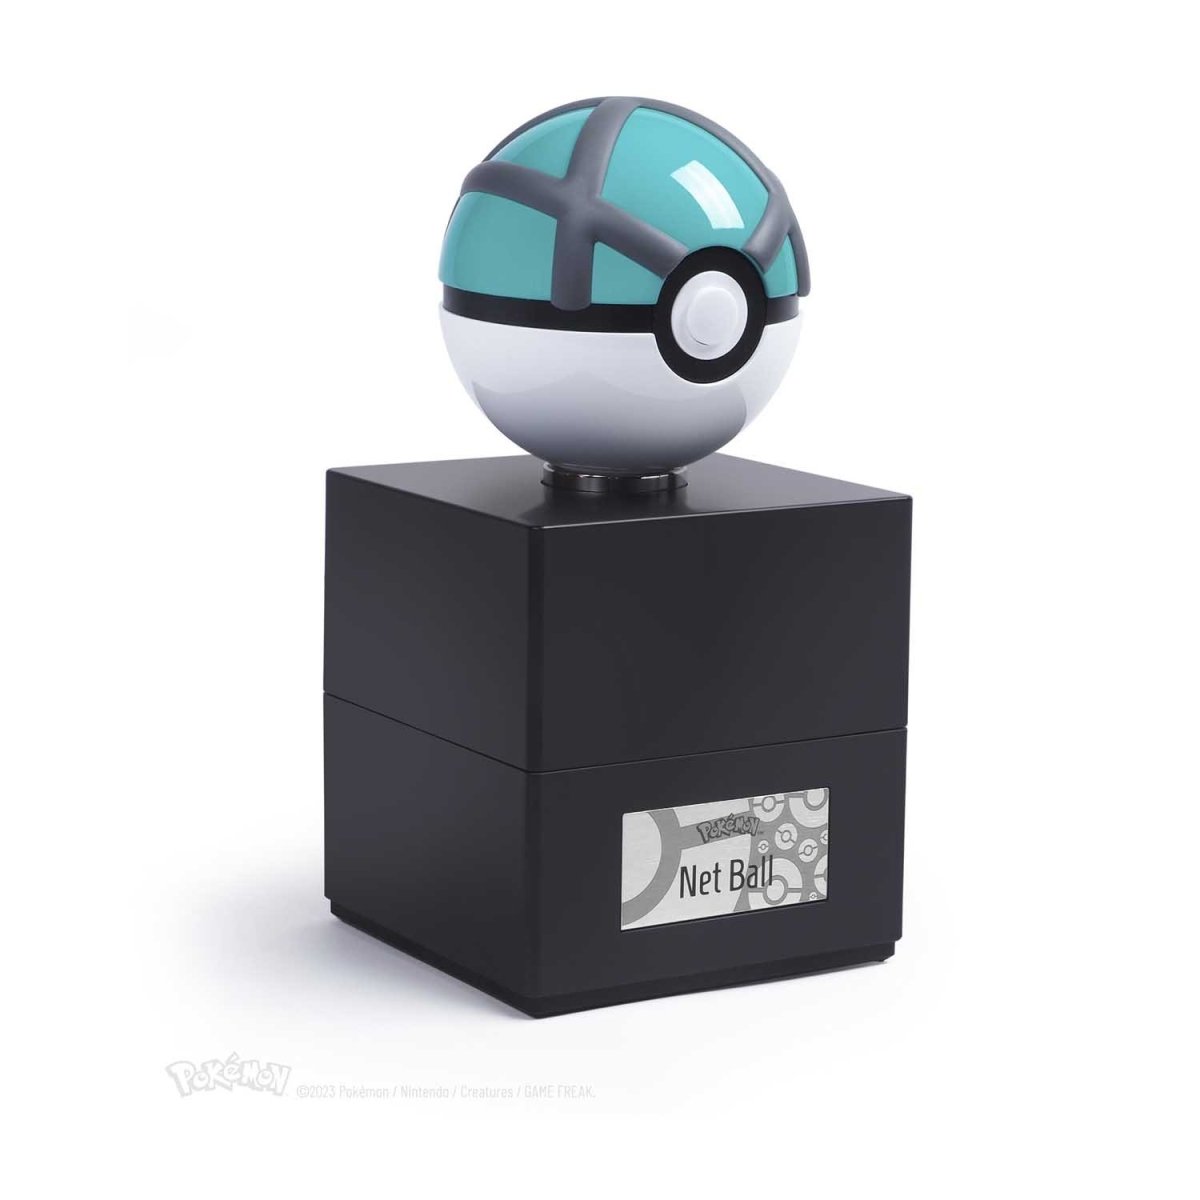 Pokémon: The Wand Company presenta la Net Ball ¡Conoce los detalles! 3